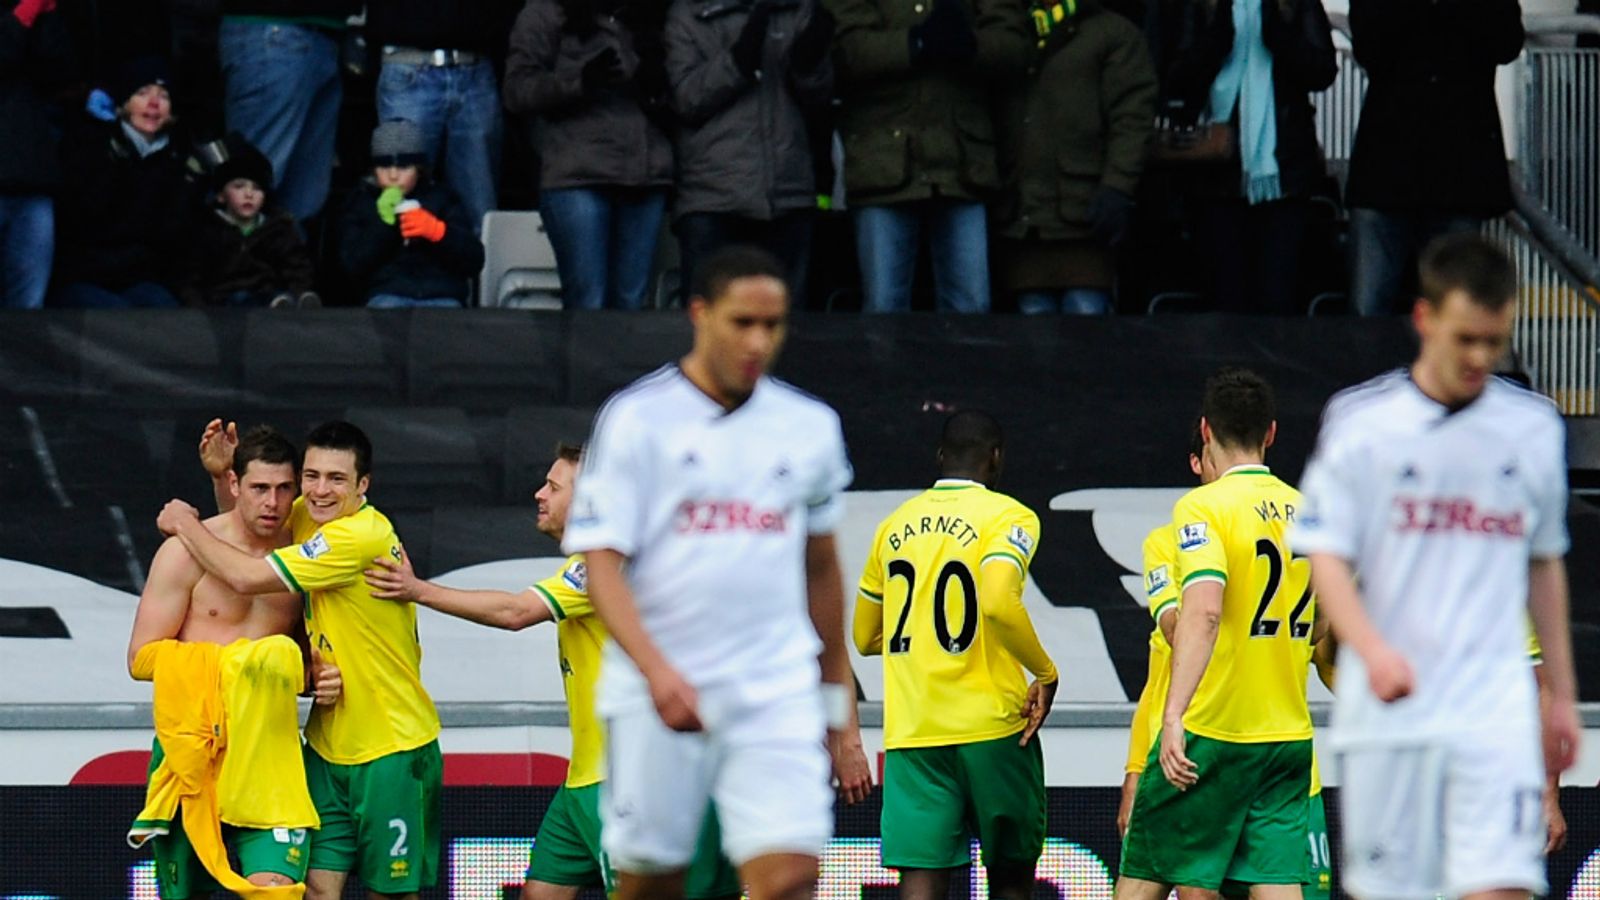 Swansea 2 - 3 Norwich - Match Report & Highlights1600 x 900